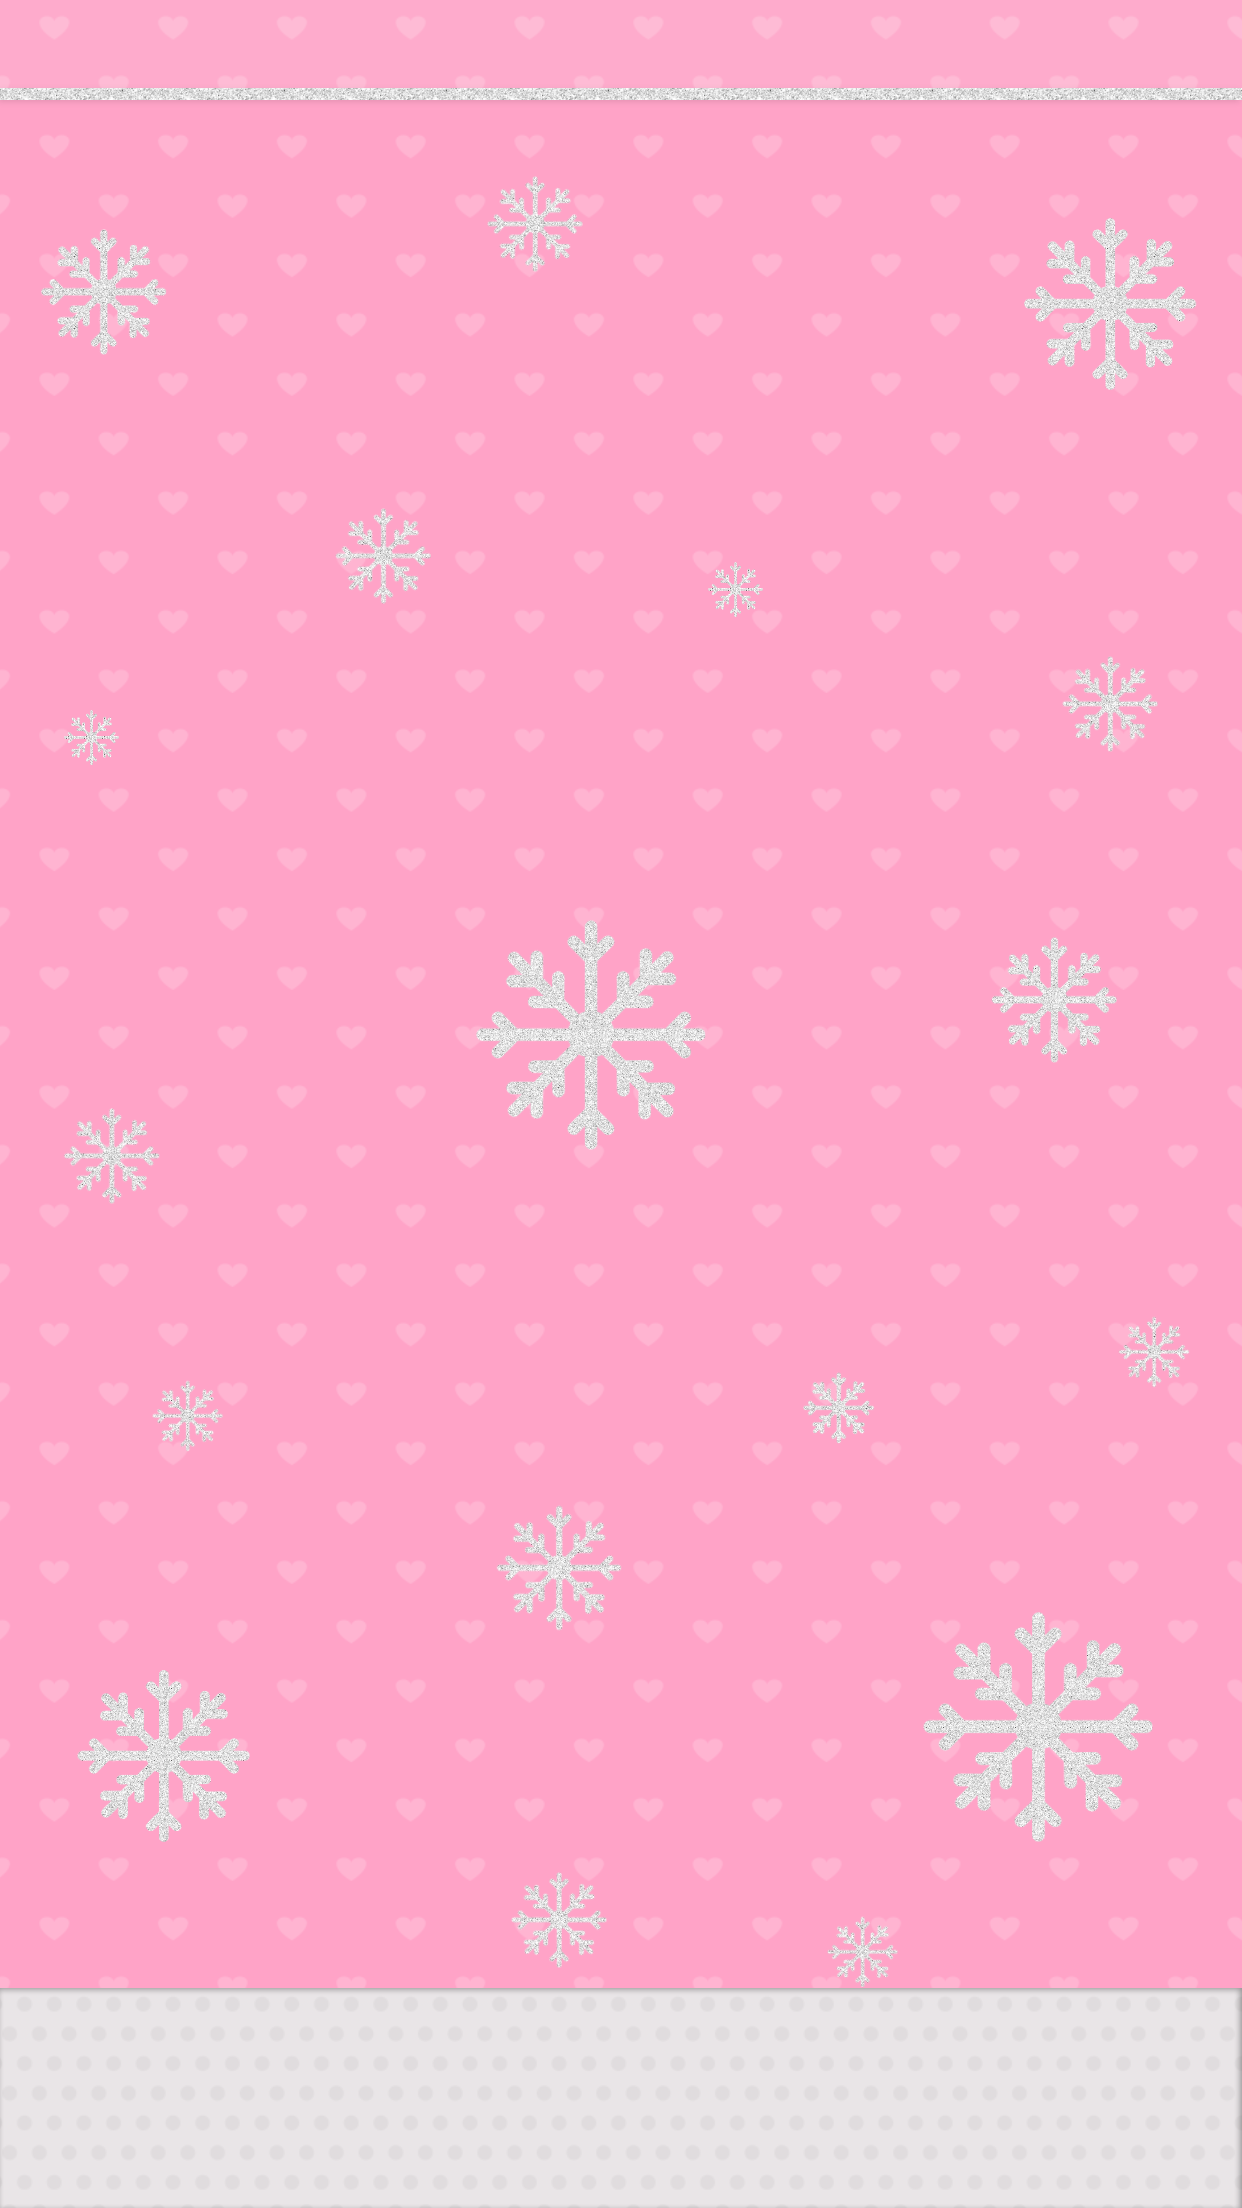 Cute Pink snowflakes christmas wallpaper. Wallpaper iphone christmas, Christmas wallpaper iphone cute, iPhone wallpaper